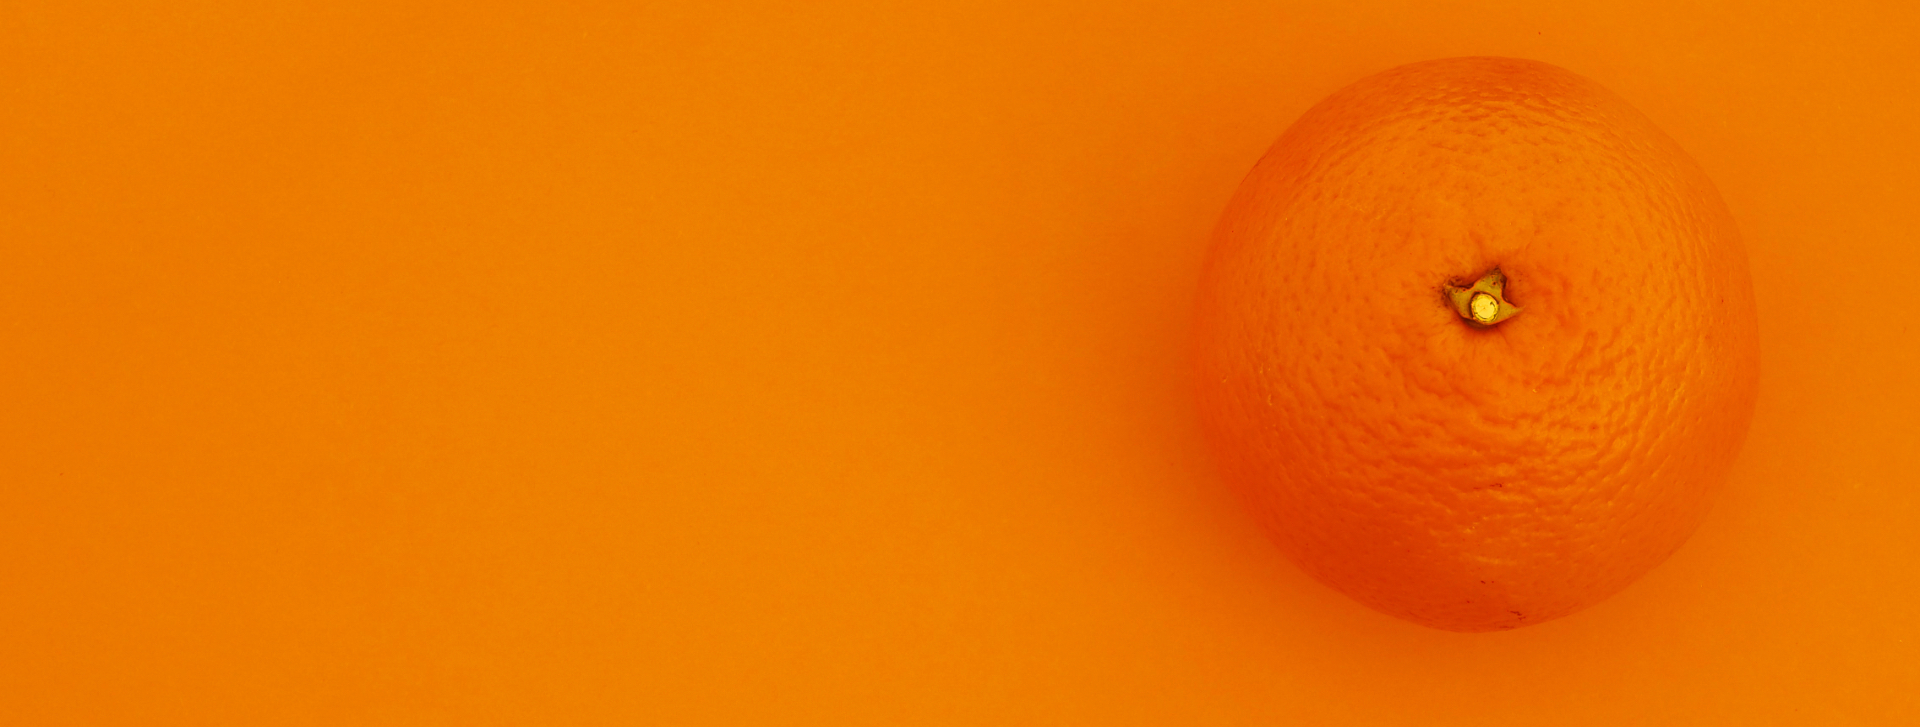 Orange sitting on a table